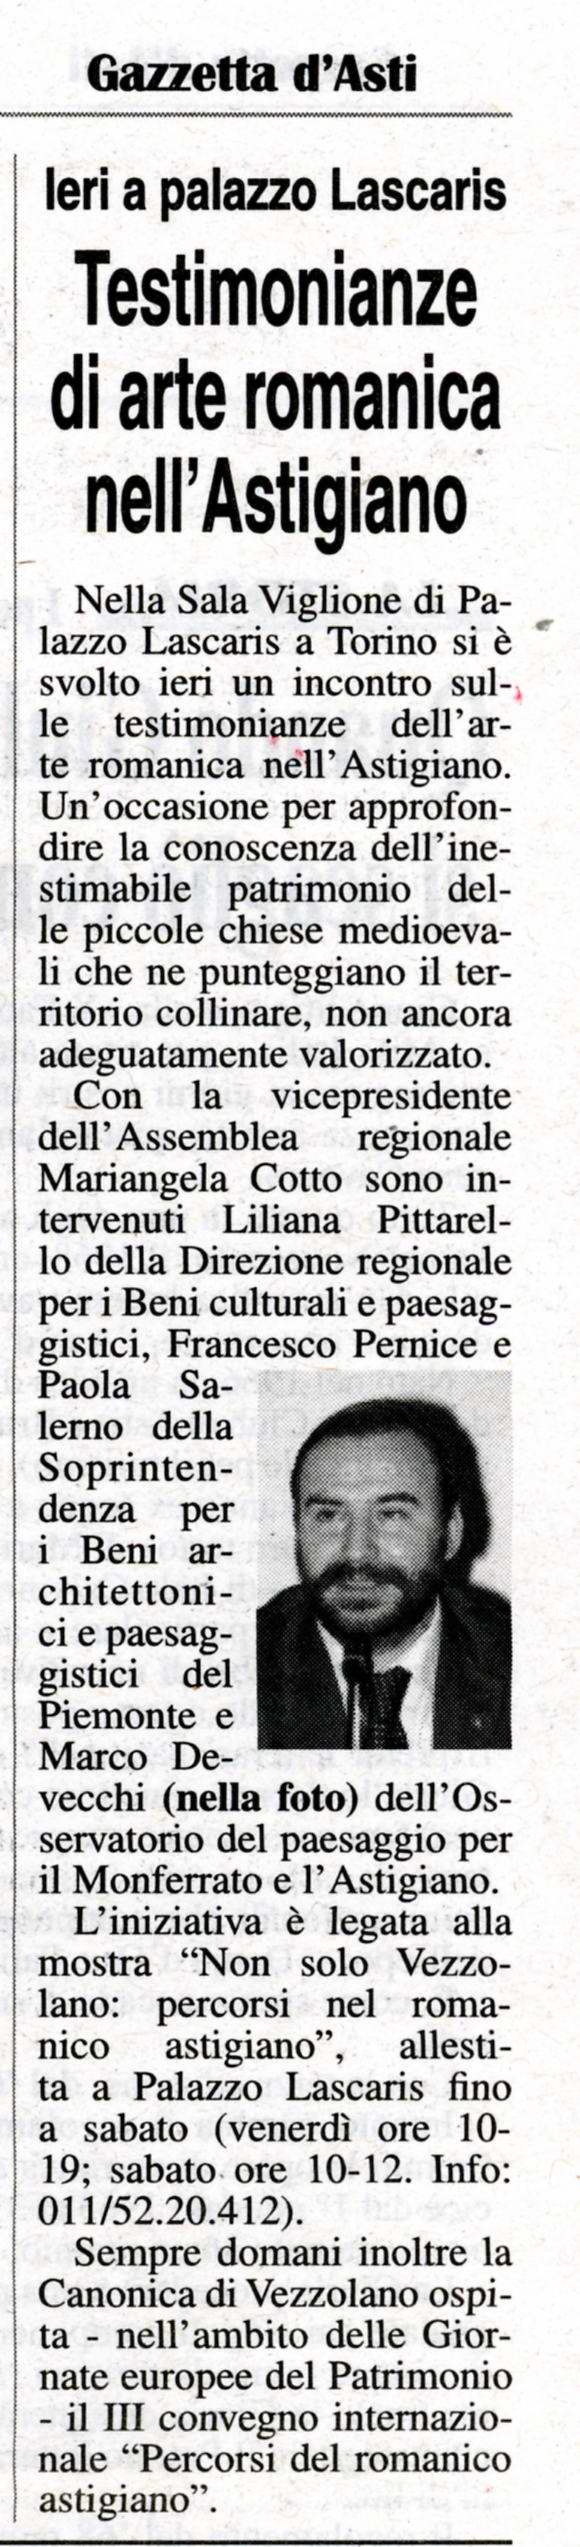 Gazzetta d'Asti (venerdì 25 settembre 2009)